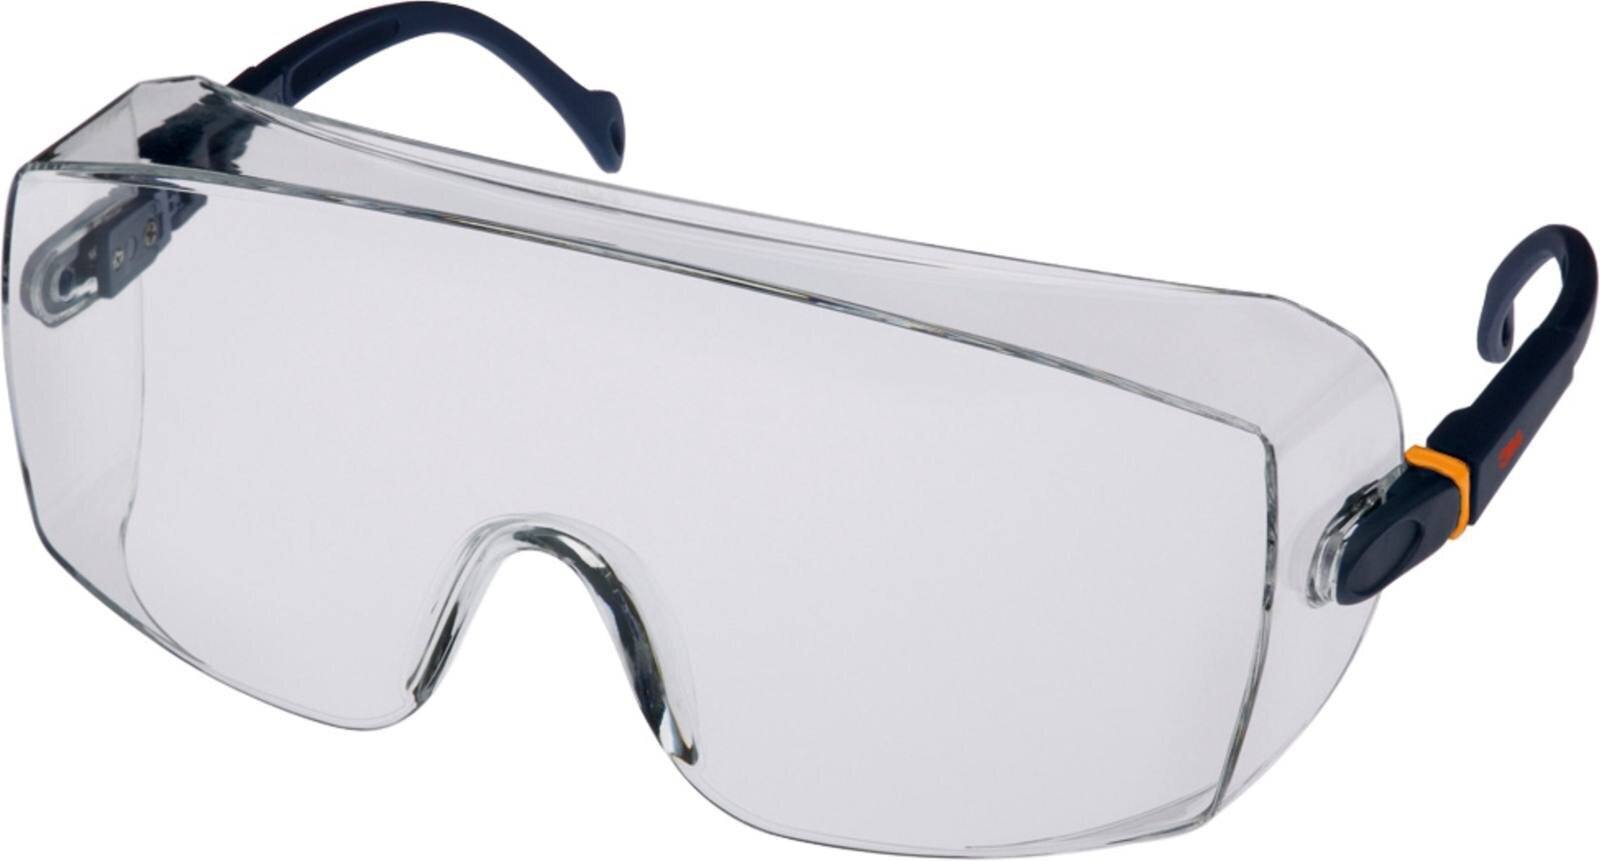 Очки защитные окпд. ANSI Z87.1 очки. Очки Safety Goggles. Wurth en166f очки защитные. Очки открытые 3m 2821.